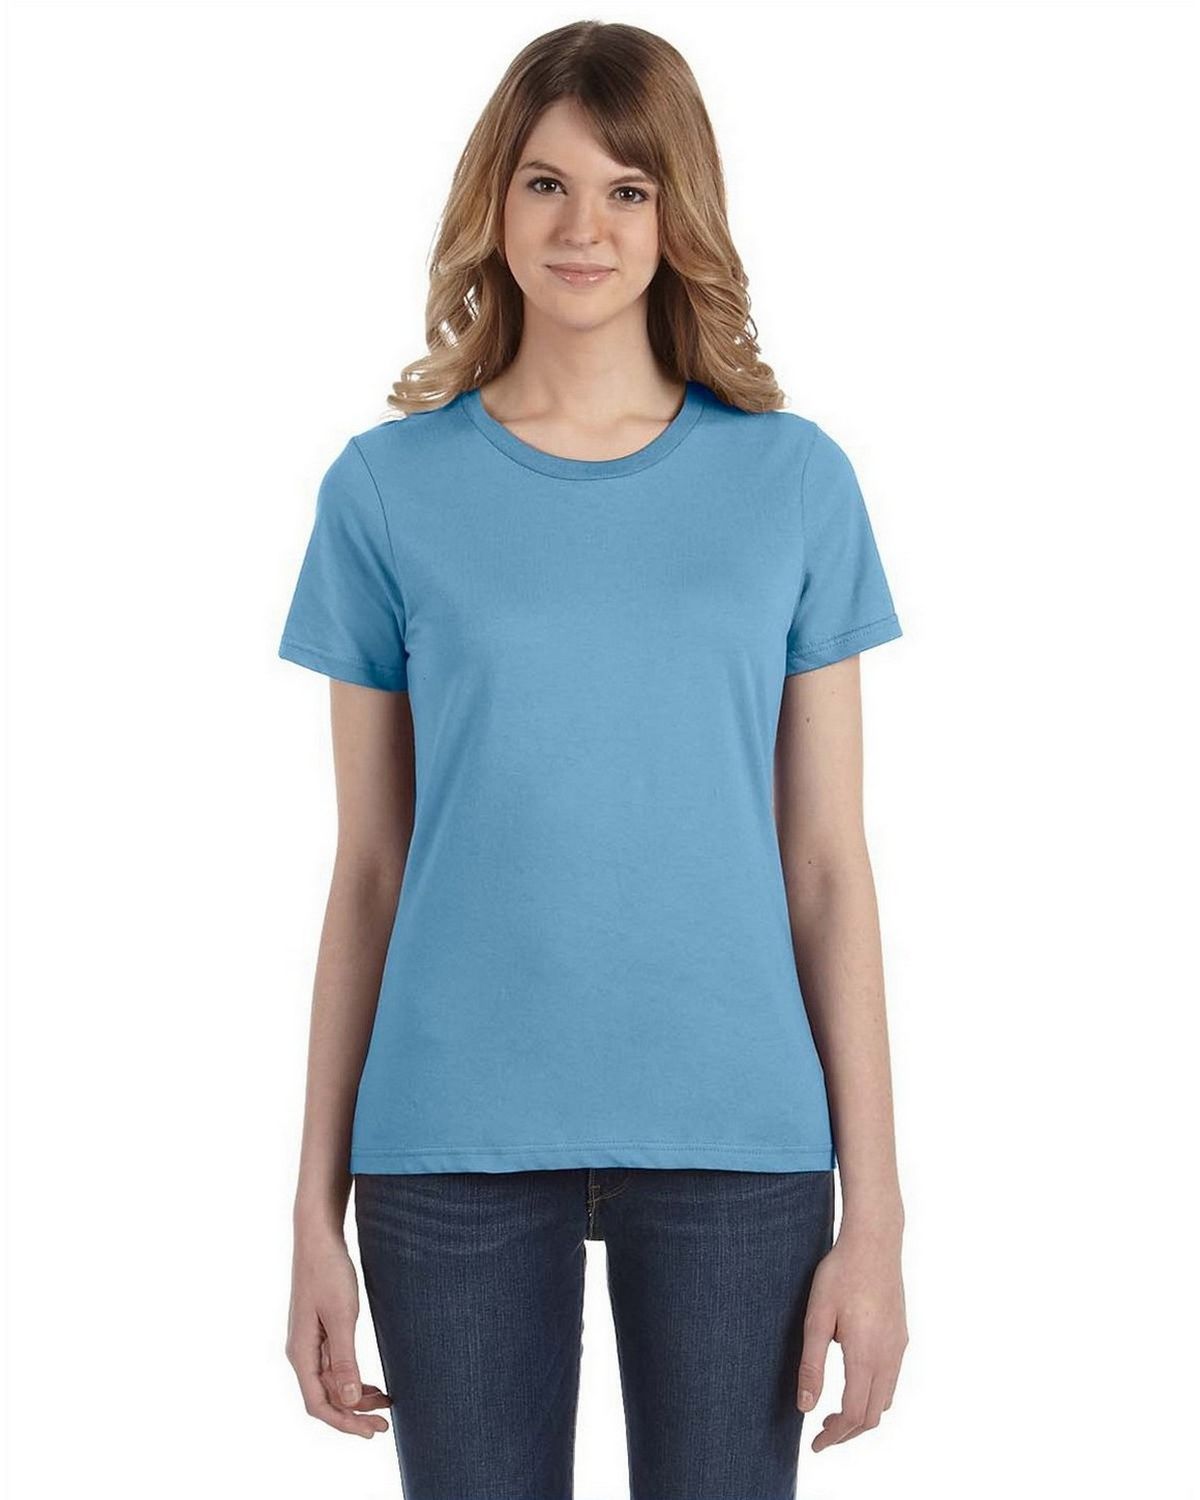 Anvil 880 Ladies 4.5 oz. Ringspun Cotton Fashion Fit T-Shirt ...